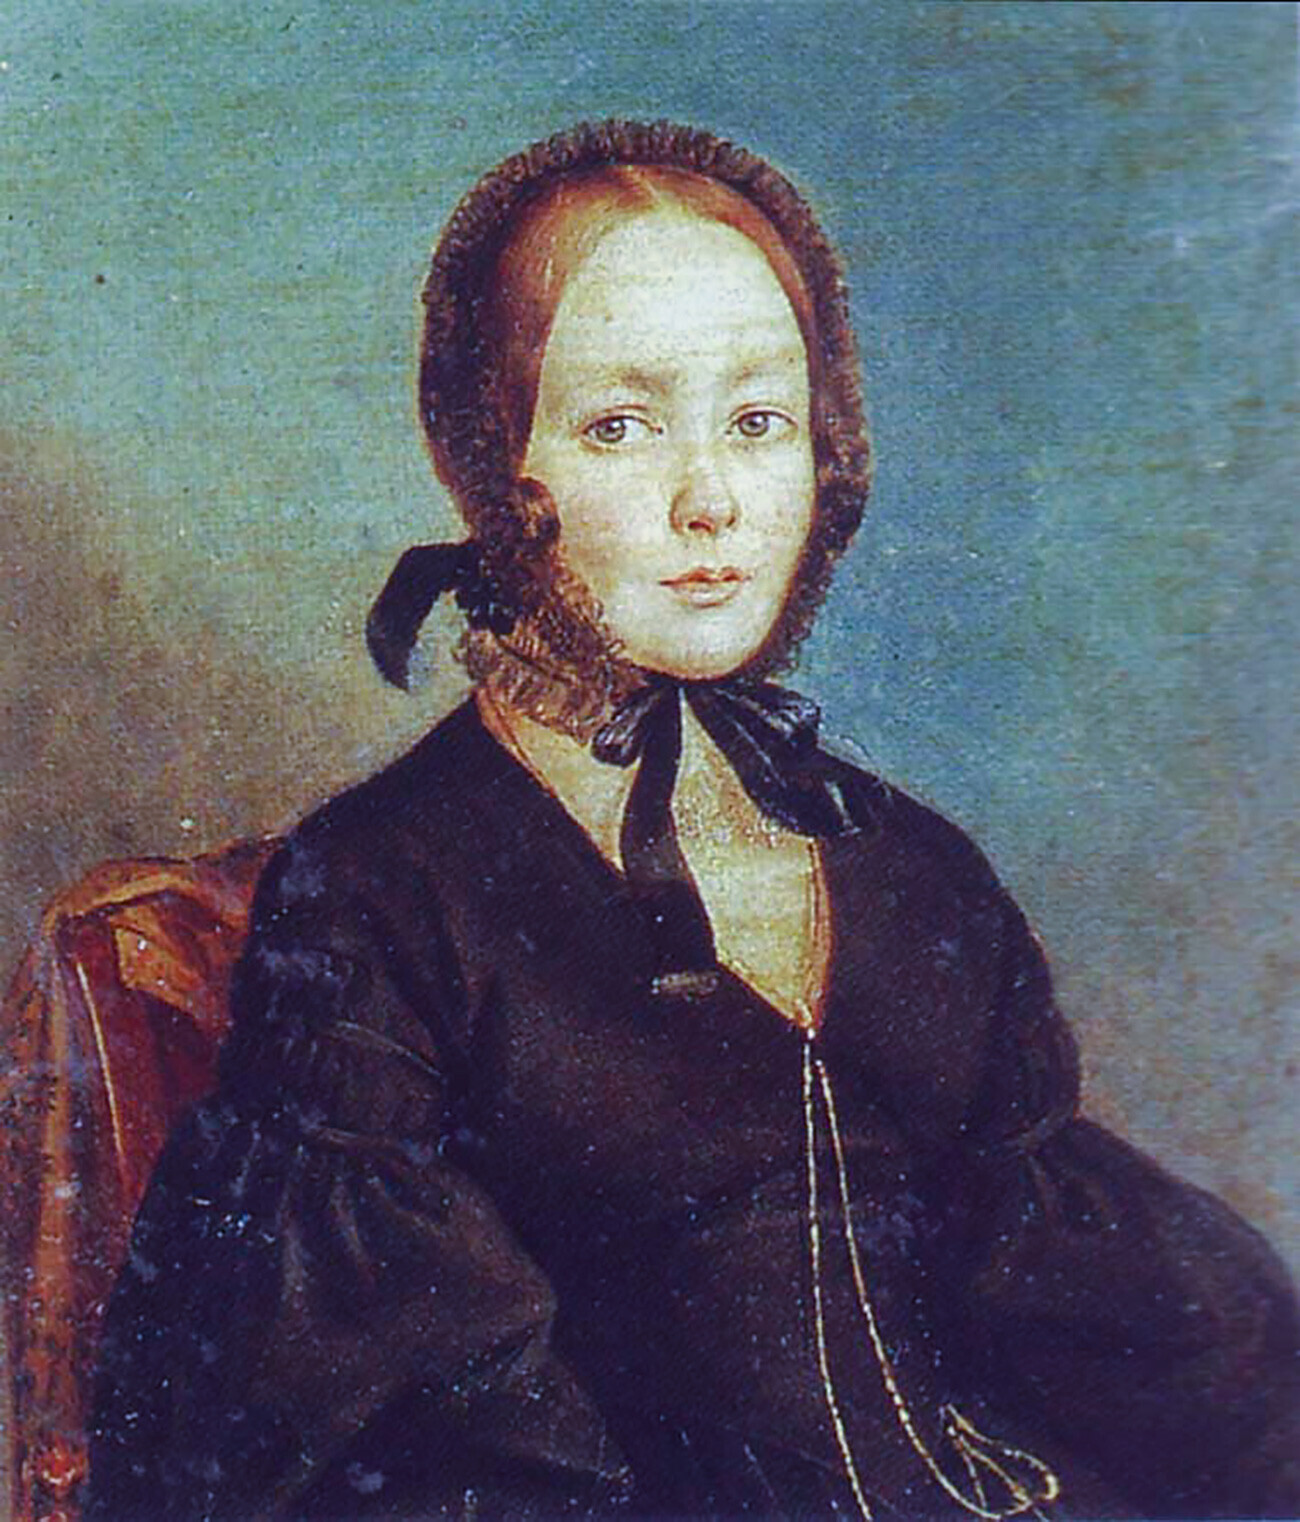 Suposto retrato de Anna Kern por A. Arefov-Bagaev, 1840.

